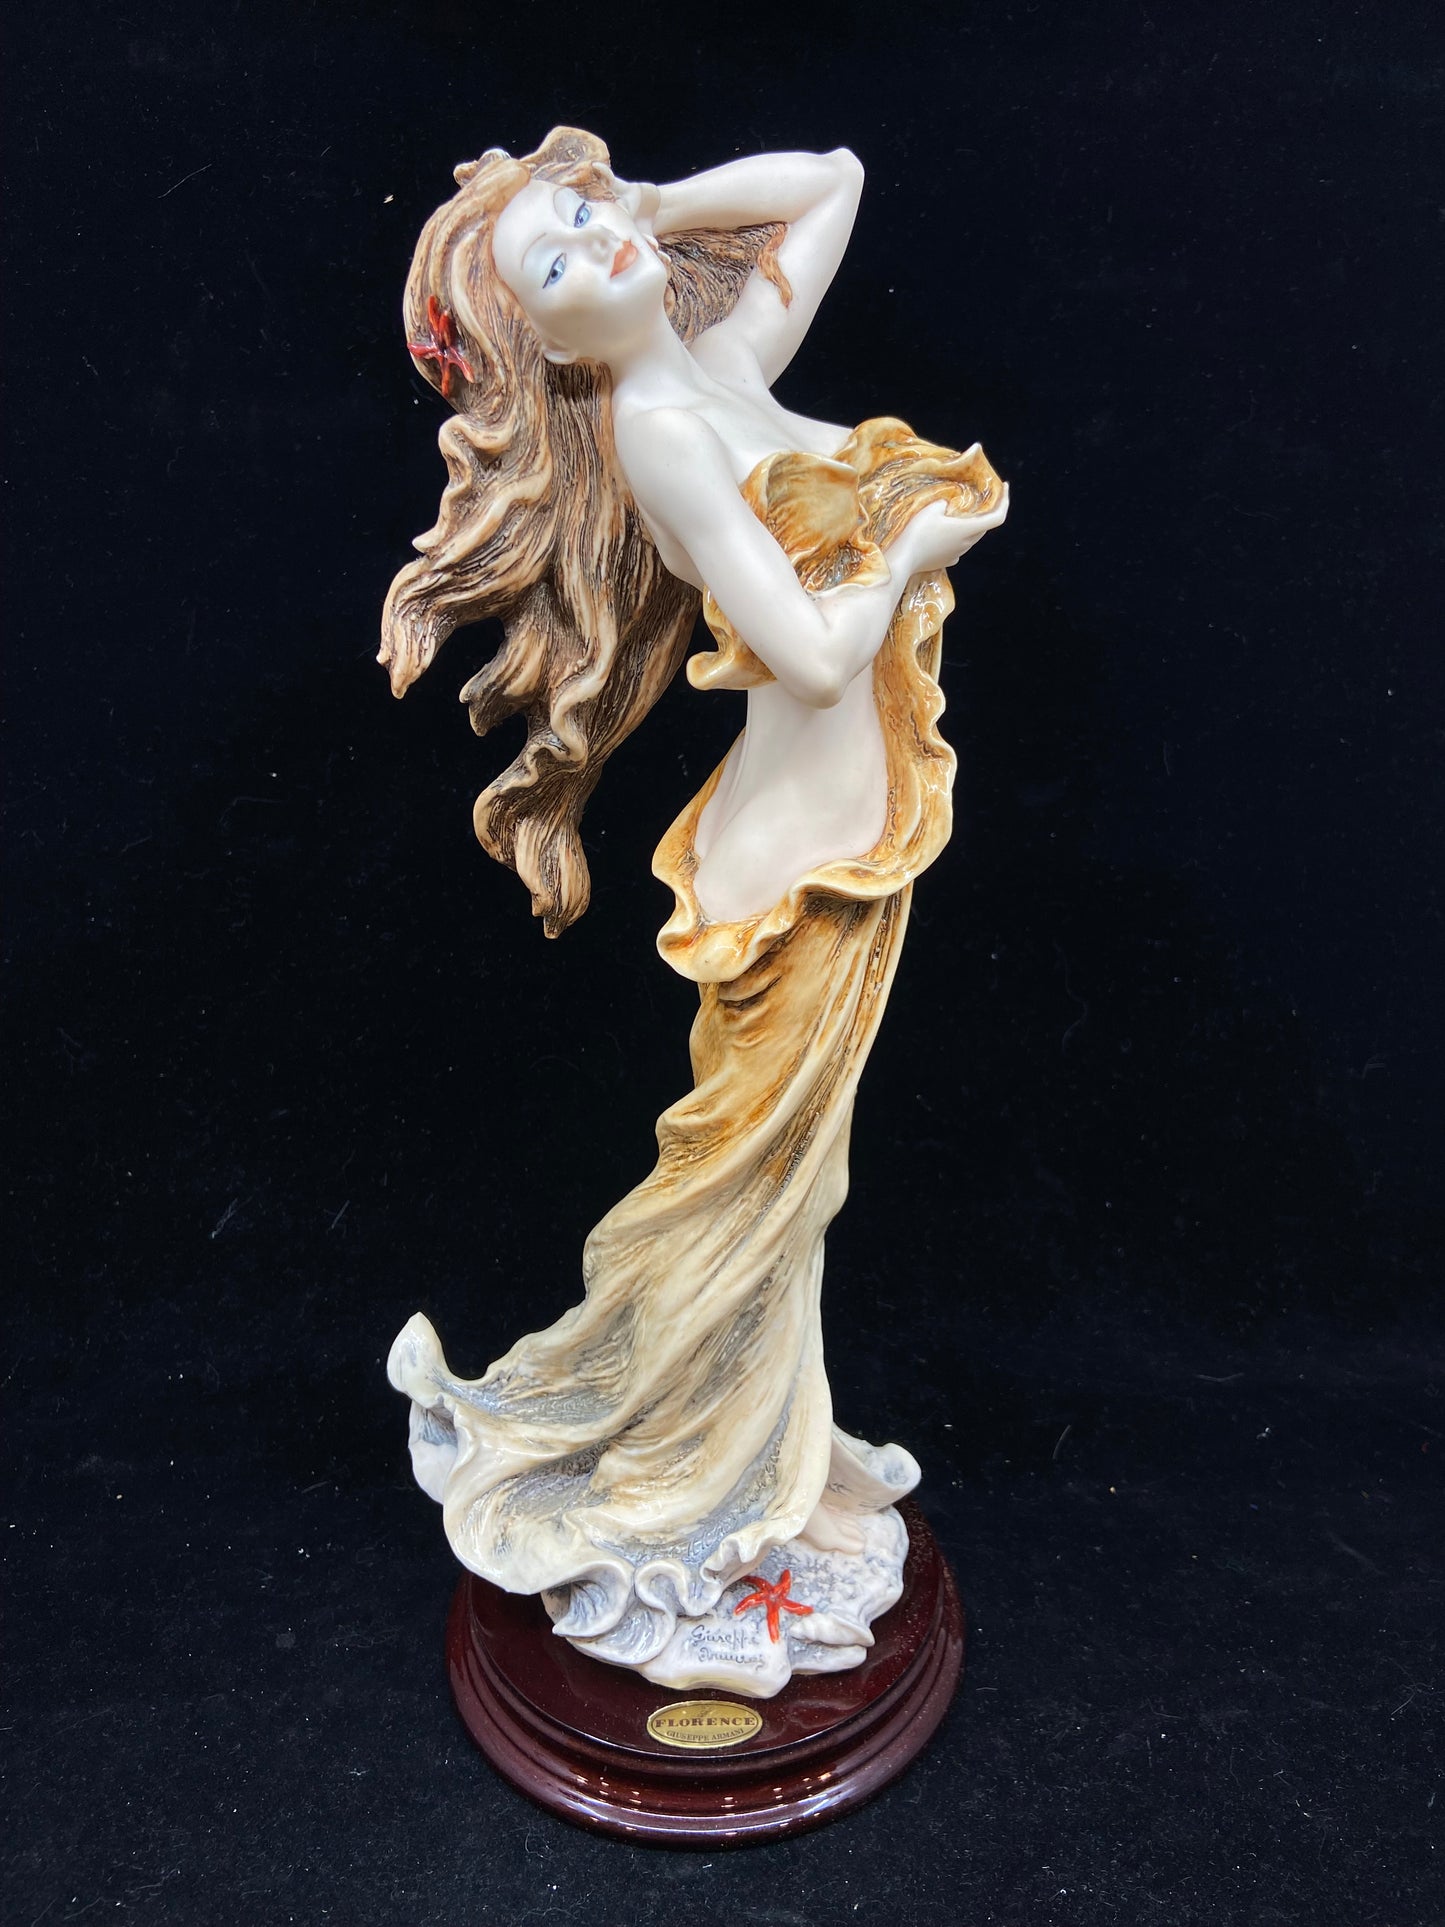 G. Armani "Summer Dreaming" Porcelain Figurine (26414)